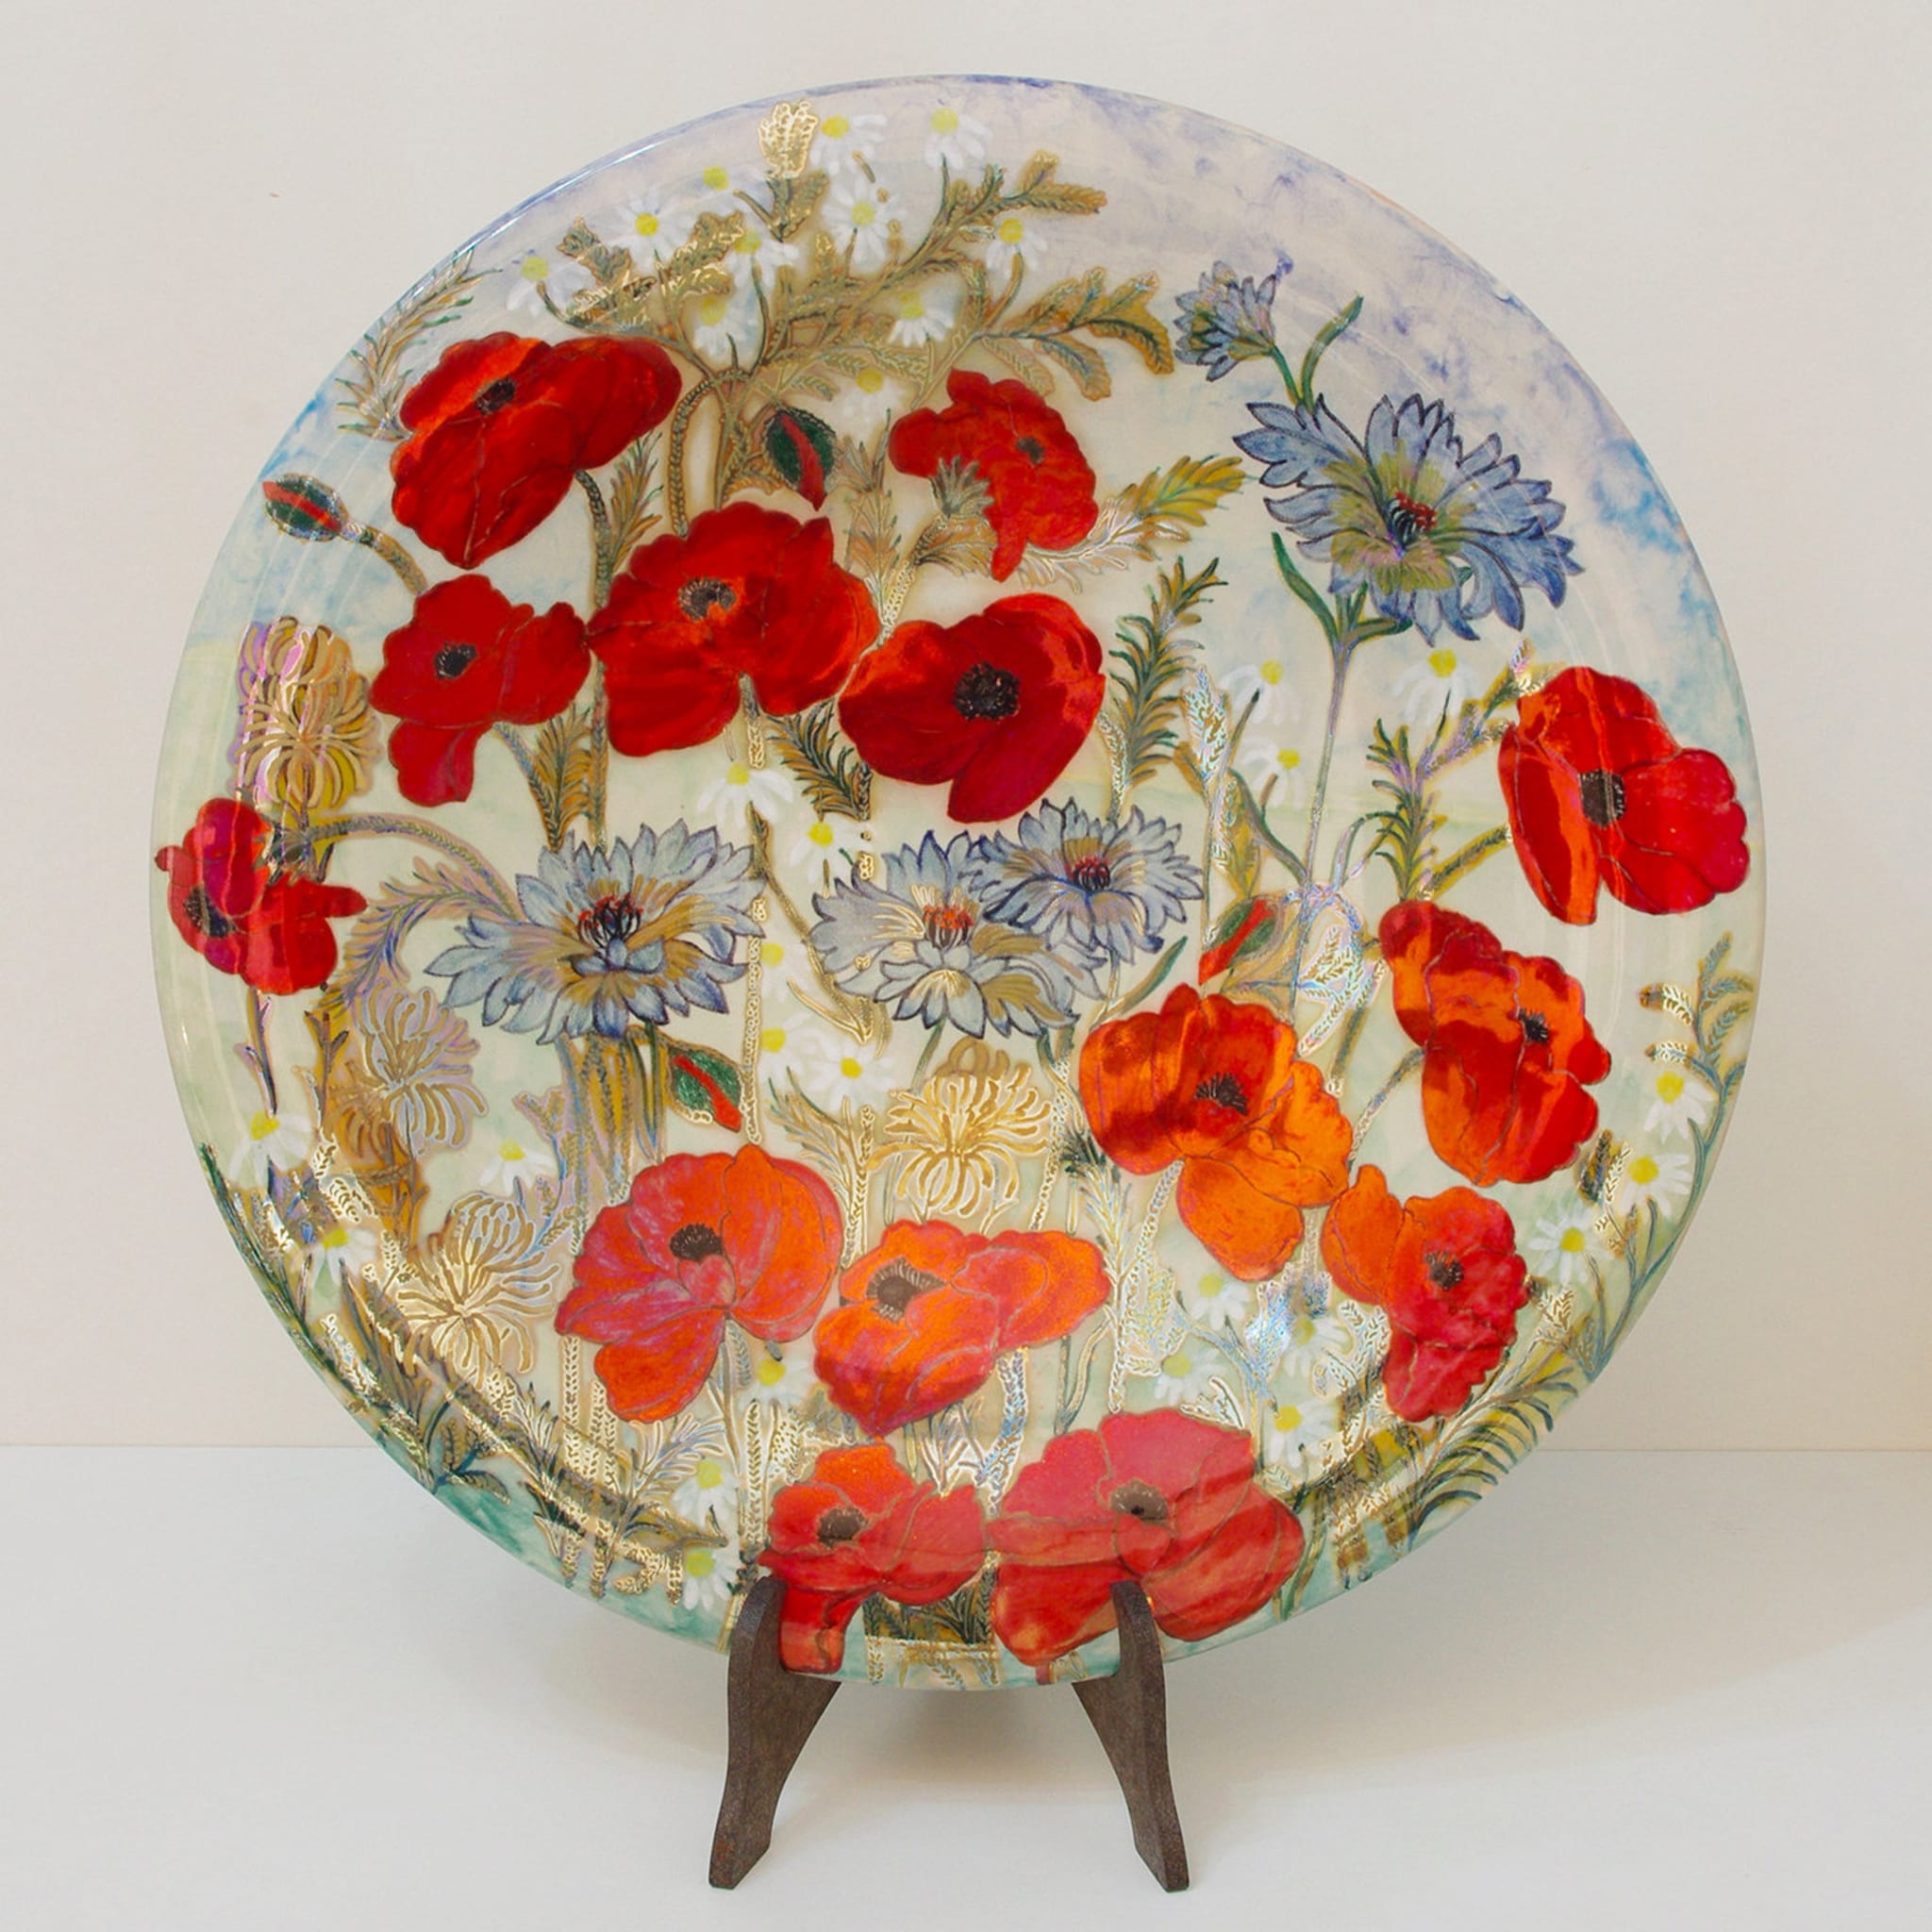 Decorative Plate with Poppy Flowers - Alternative view 1